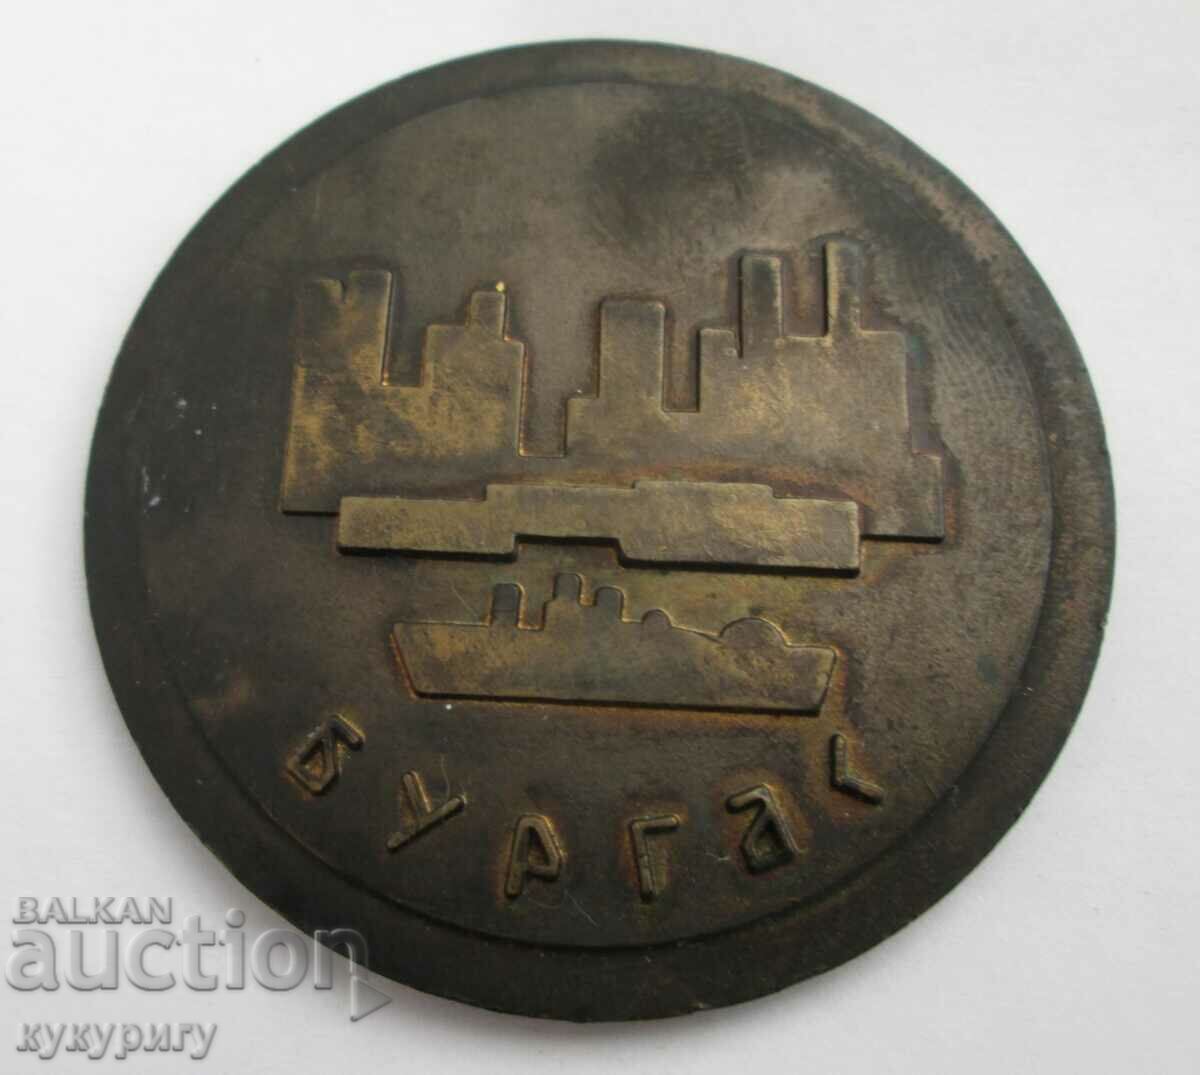 Old desktop medal plaque badge of honor of BURGAS